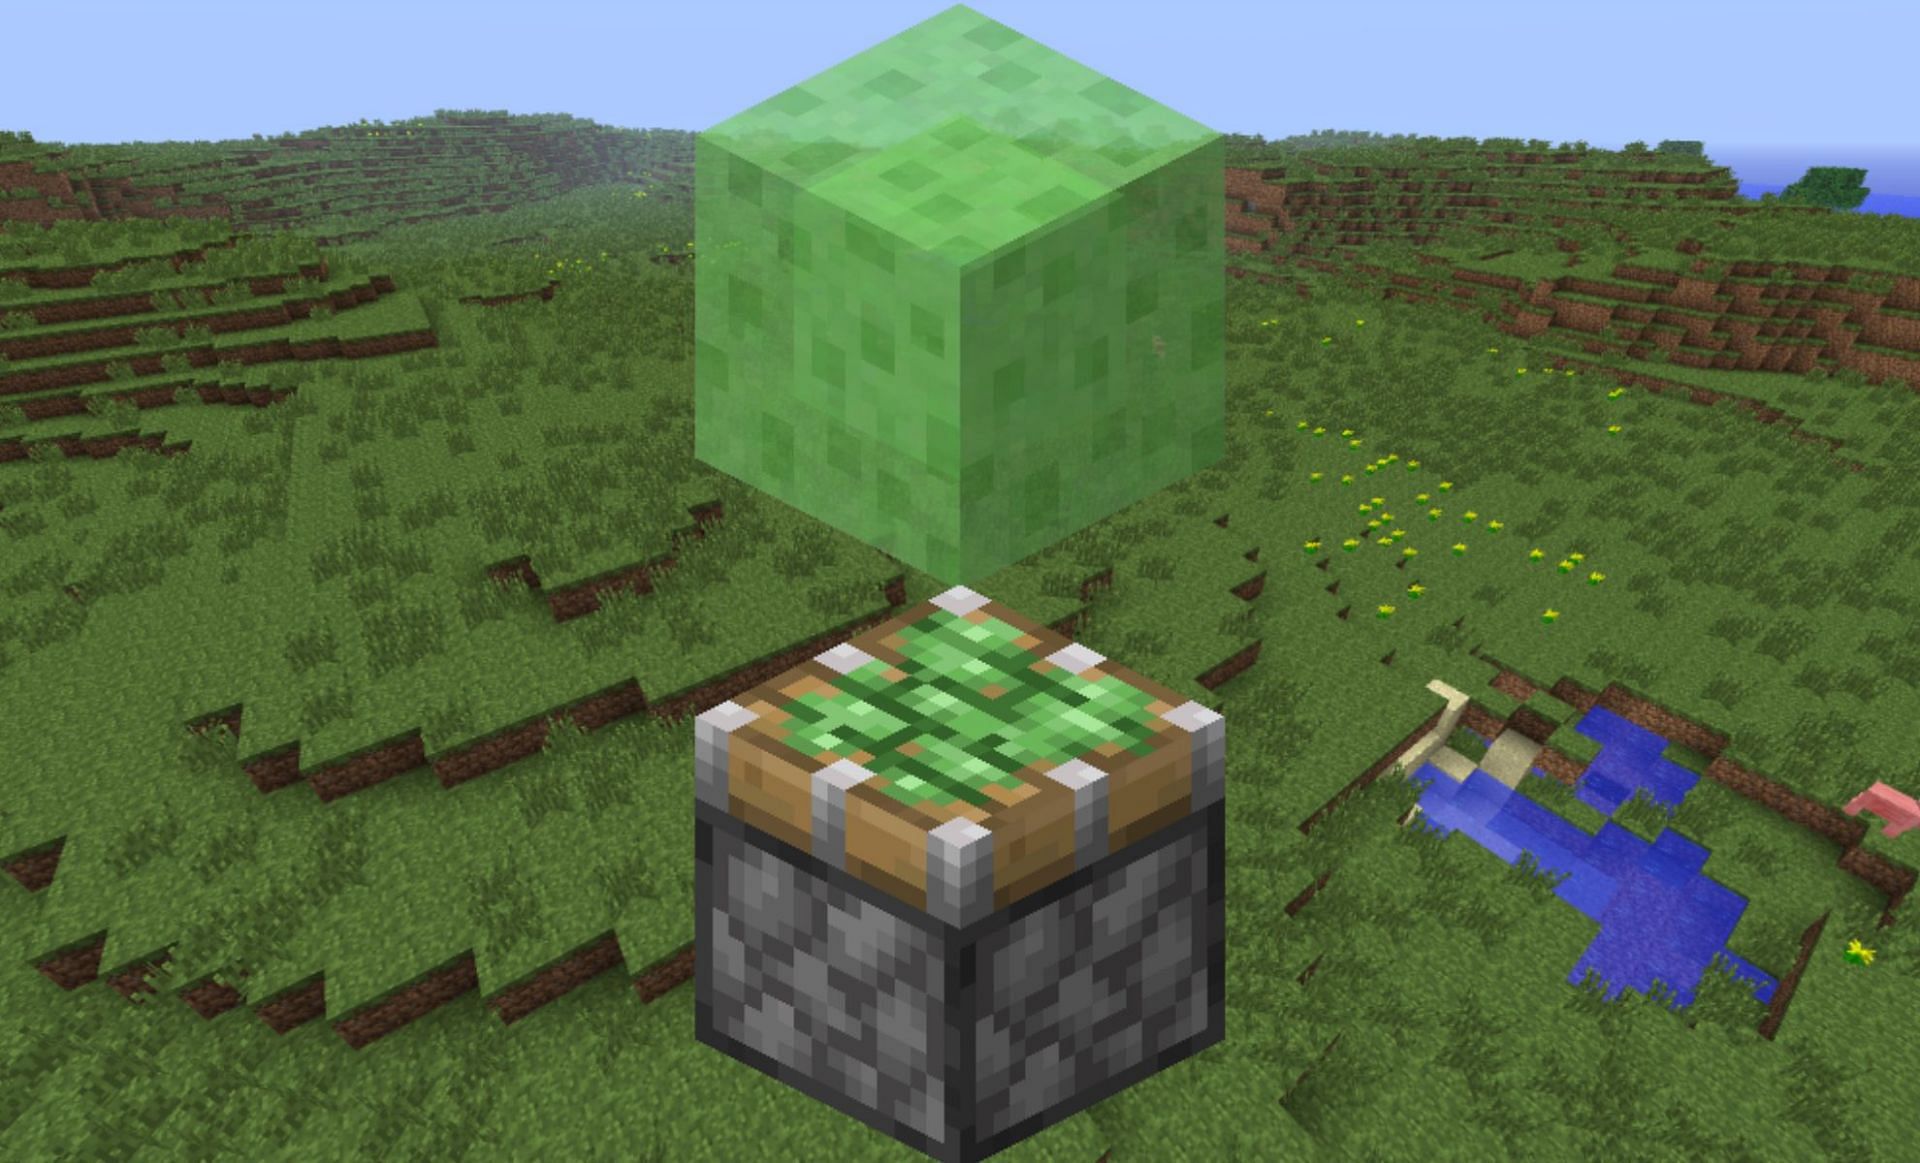 Slime blocks and sticky pistons make elevators (Image via Minecraft Wiki)